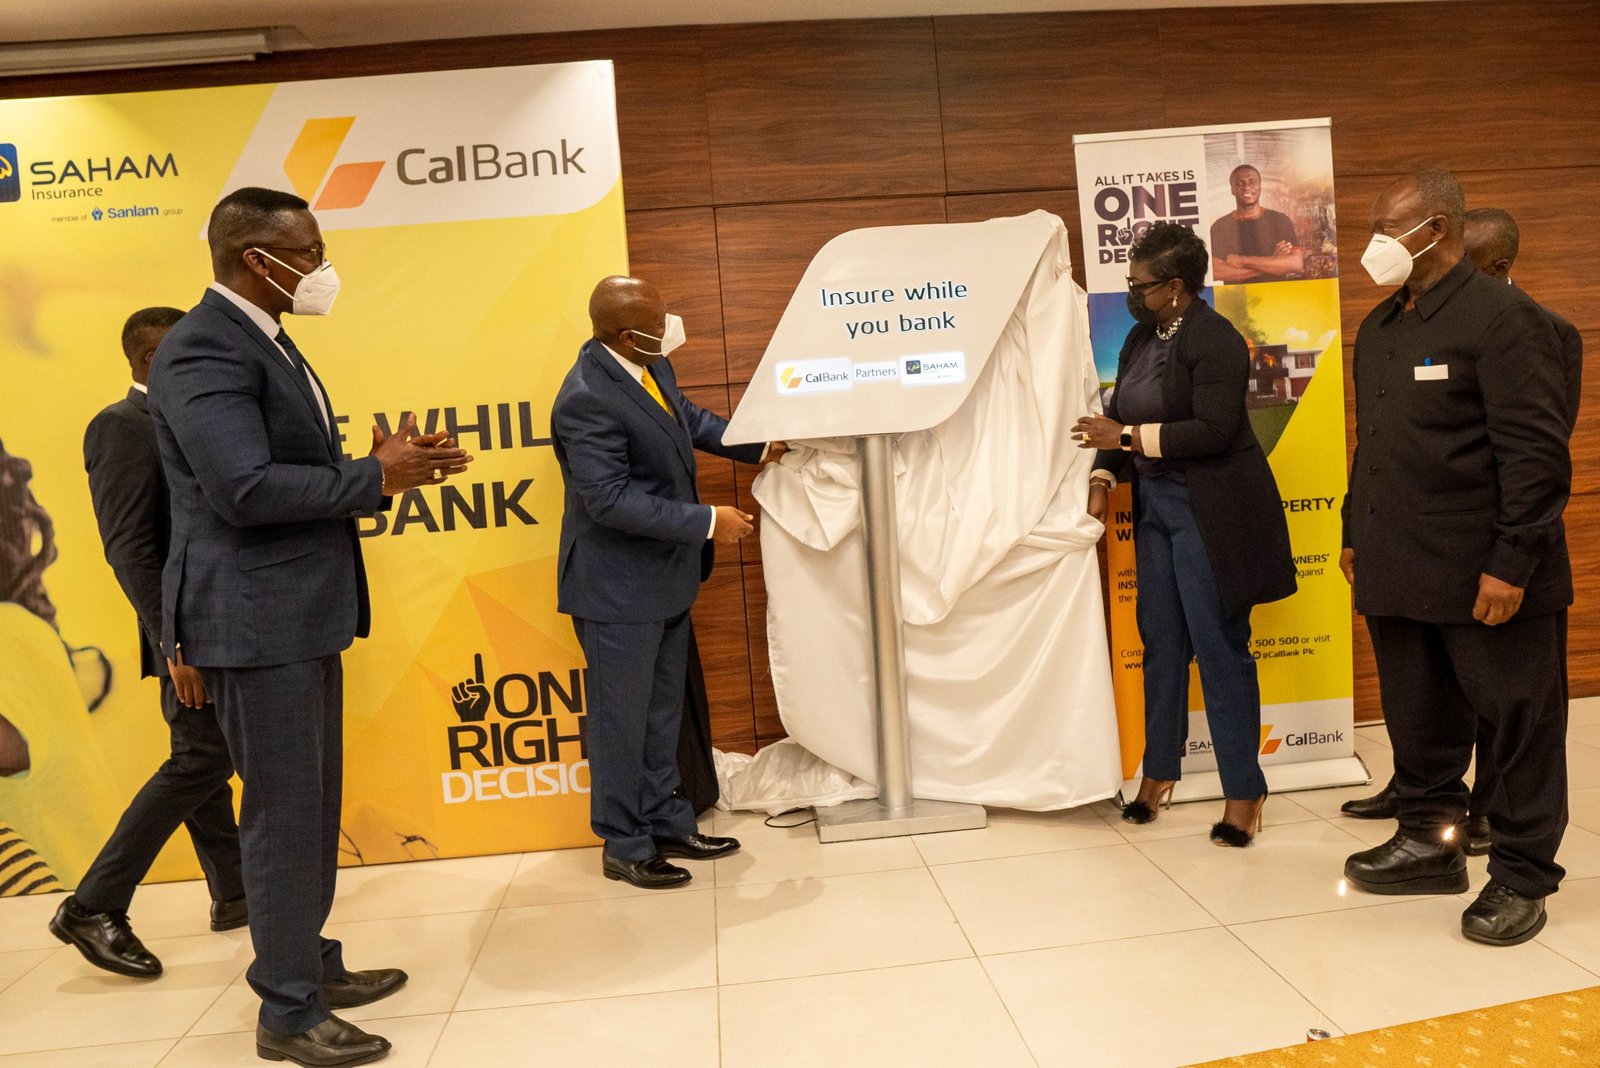 Cal Bank,Saham Insurance partner to support insurance needs of customers in Ghana